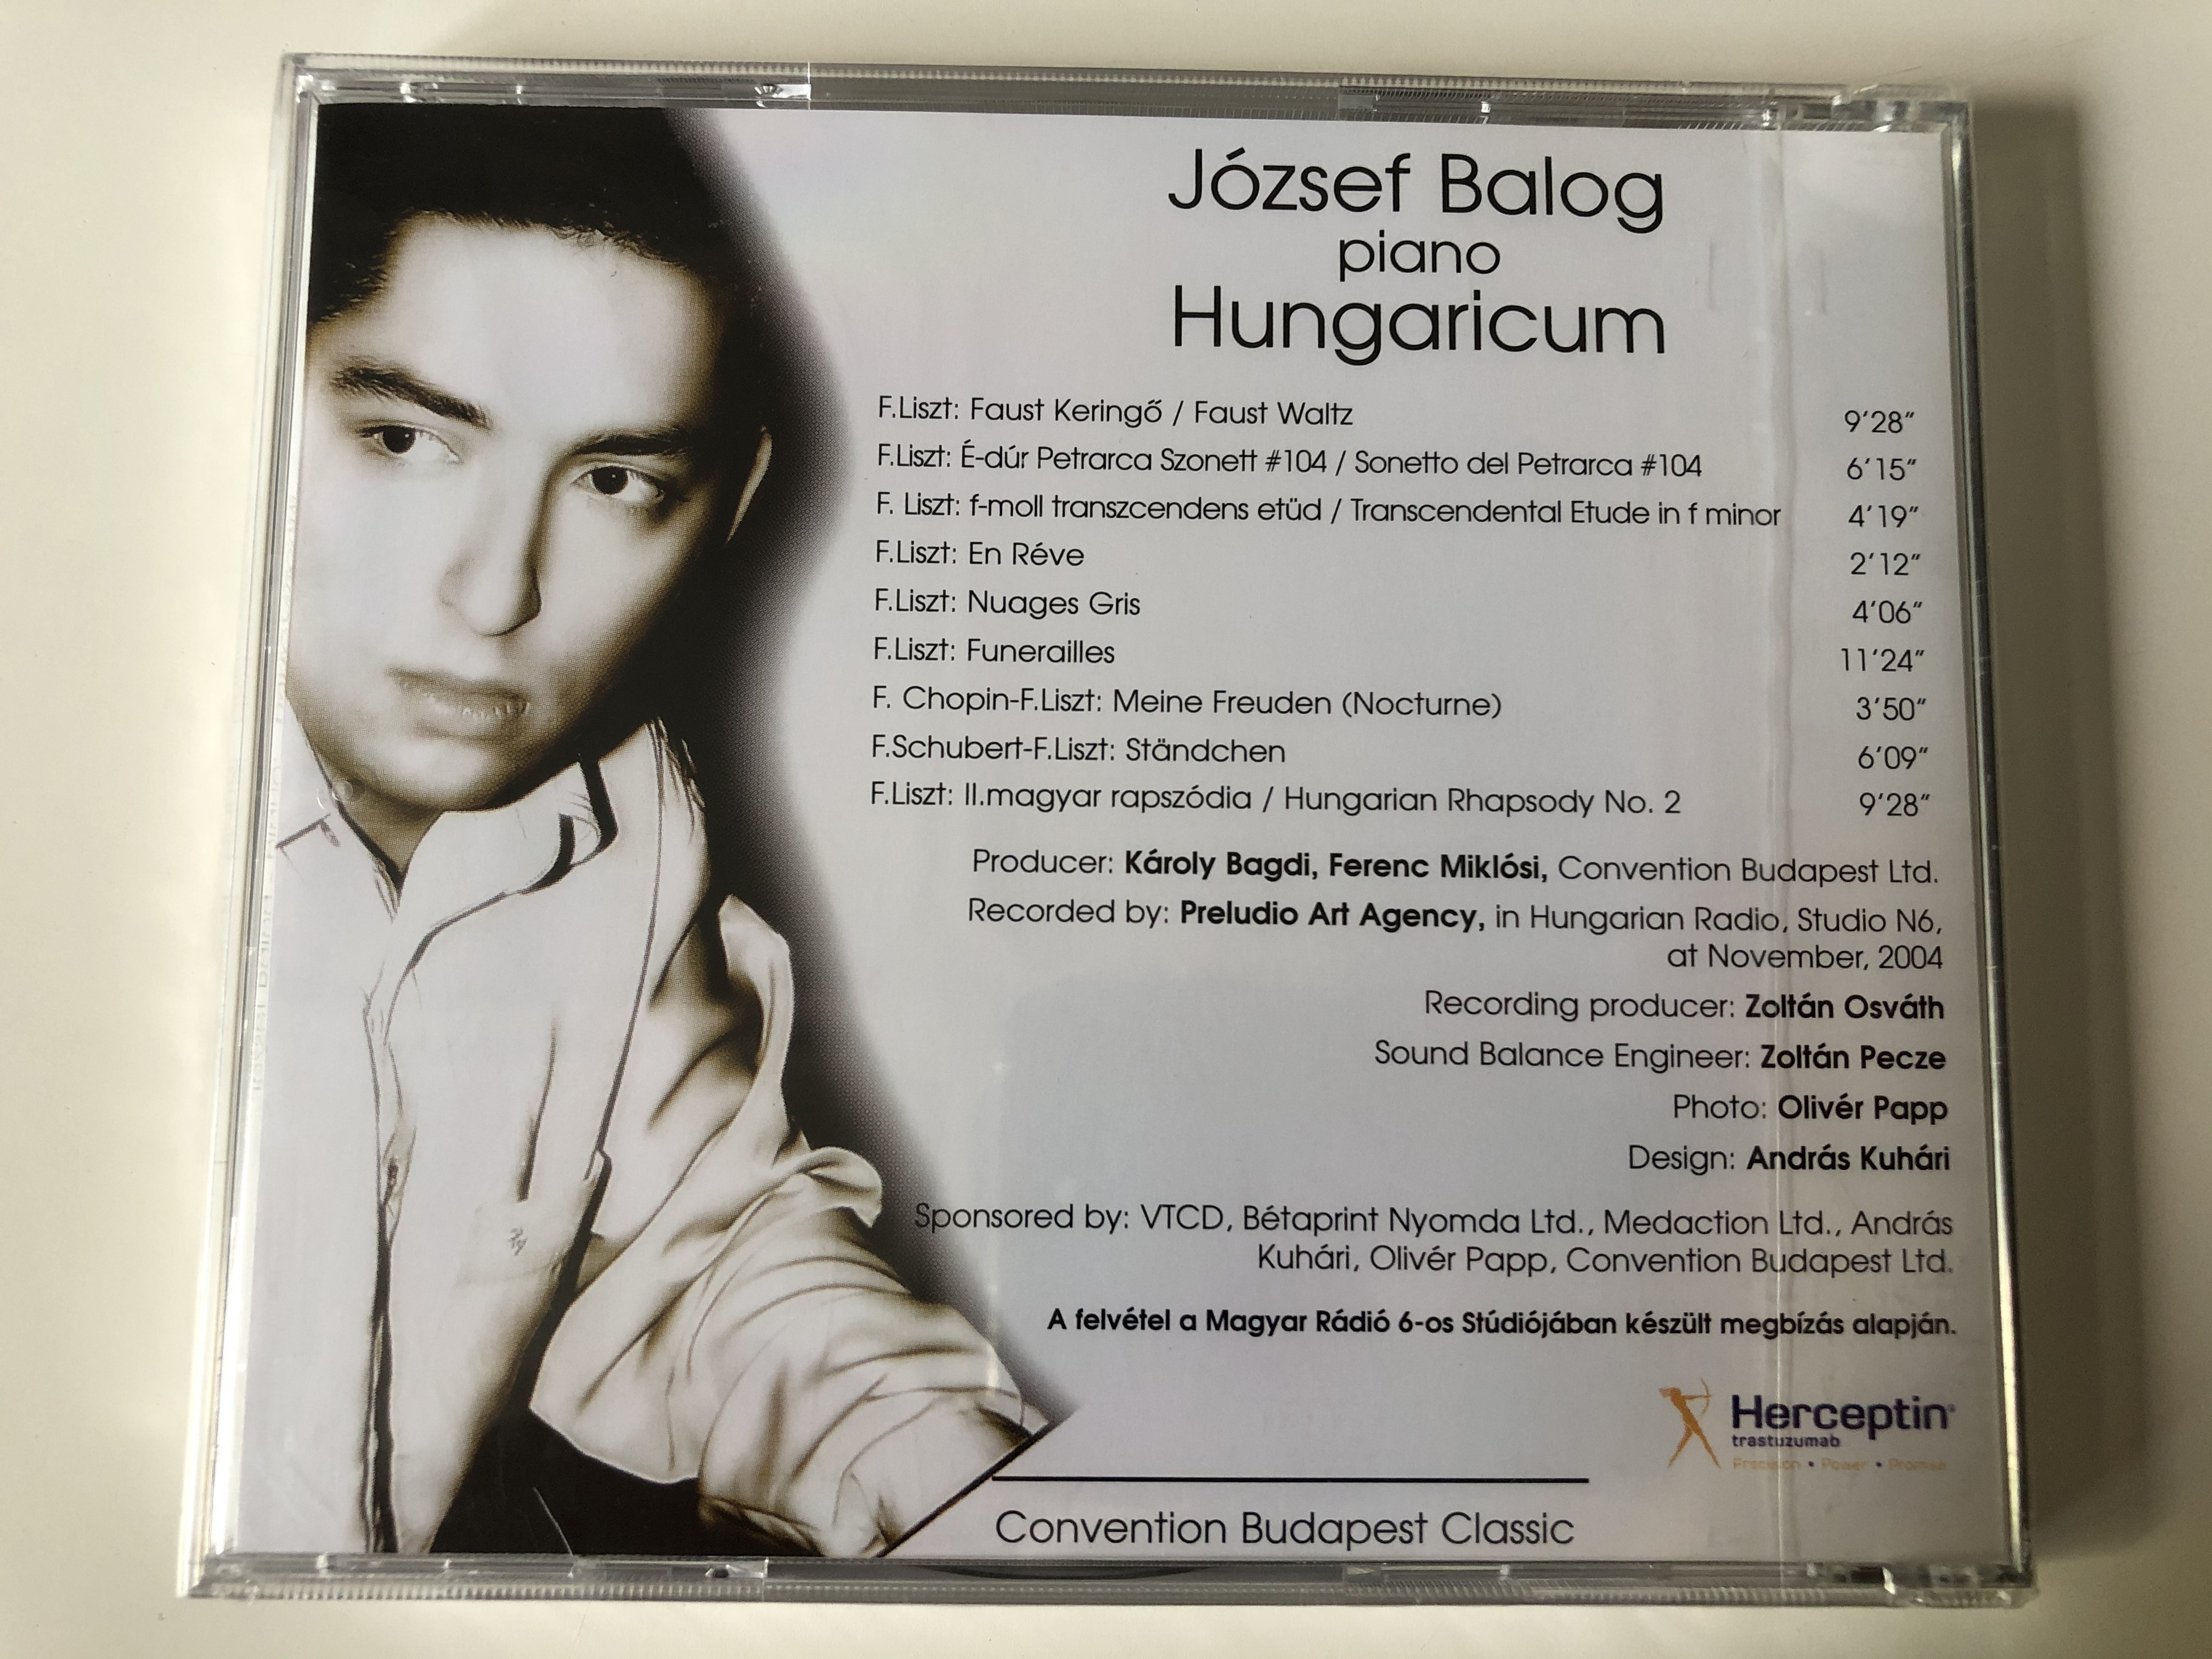 jozsef-balog-piano-hungaricum-preludio-art-agency-audio-cd-2004-2-.jpg